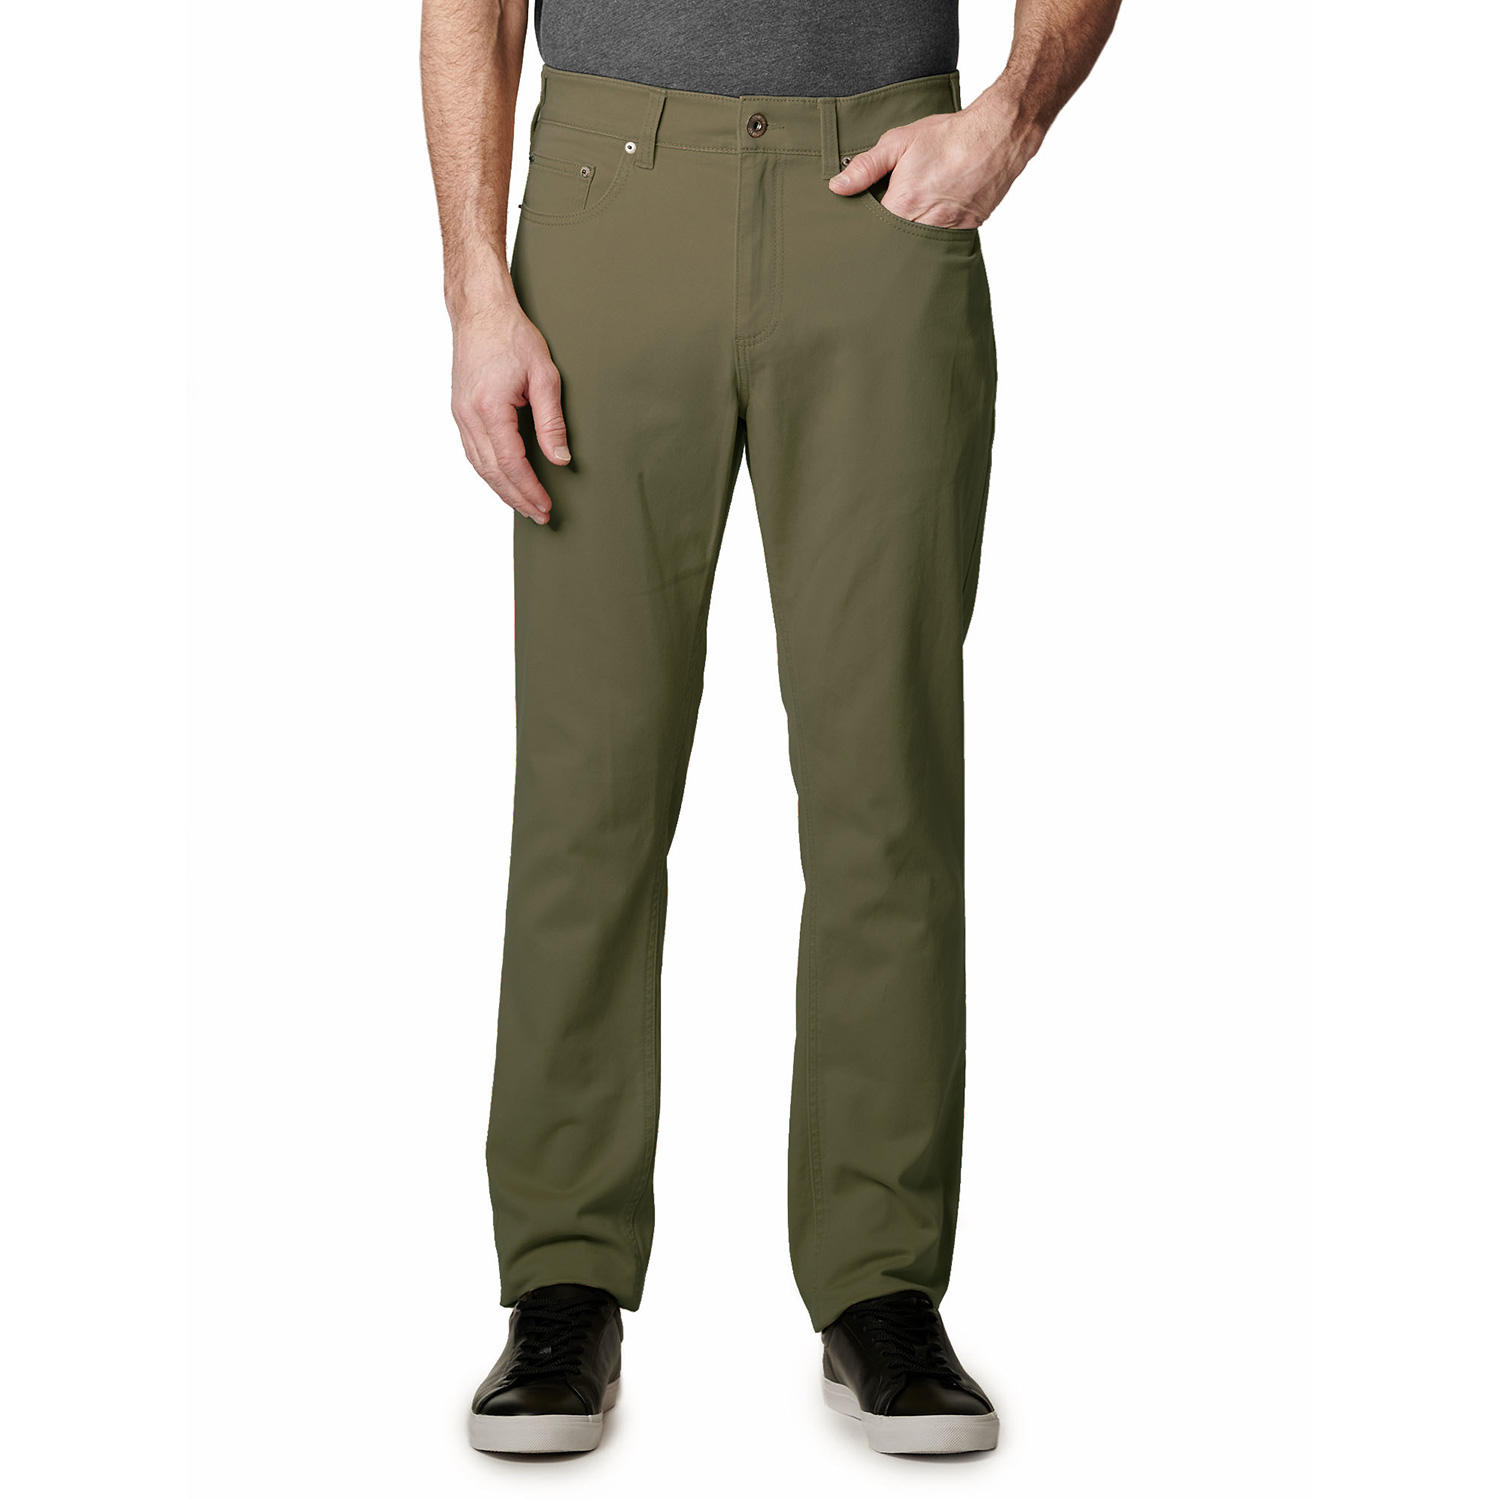 IRON Clothing PATRIOT Comfort Flex Waistband 5 Pocket Stretch Twill Pant - Turtle Green 36x30